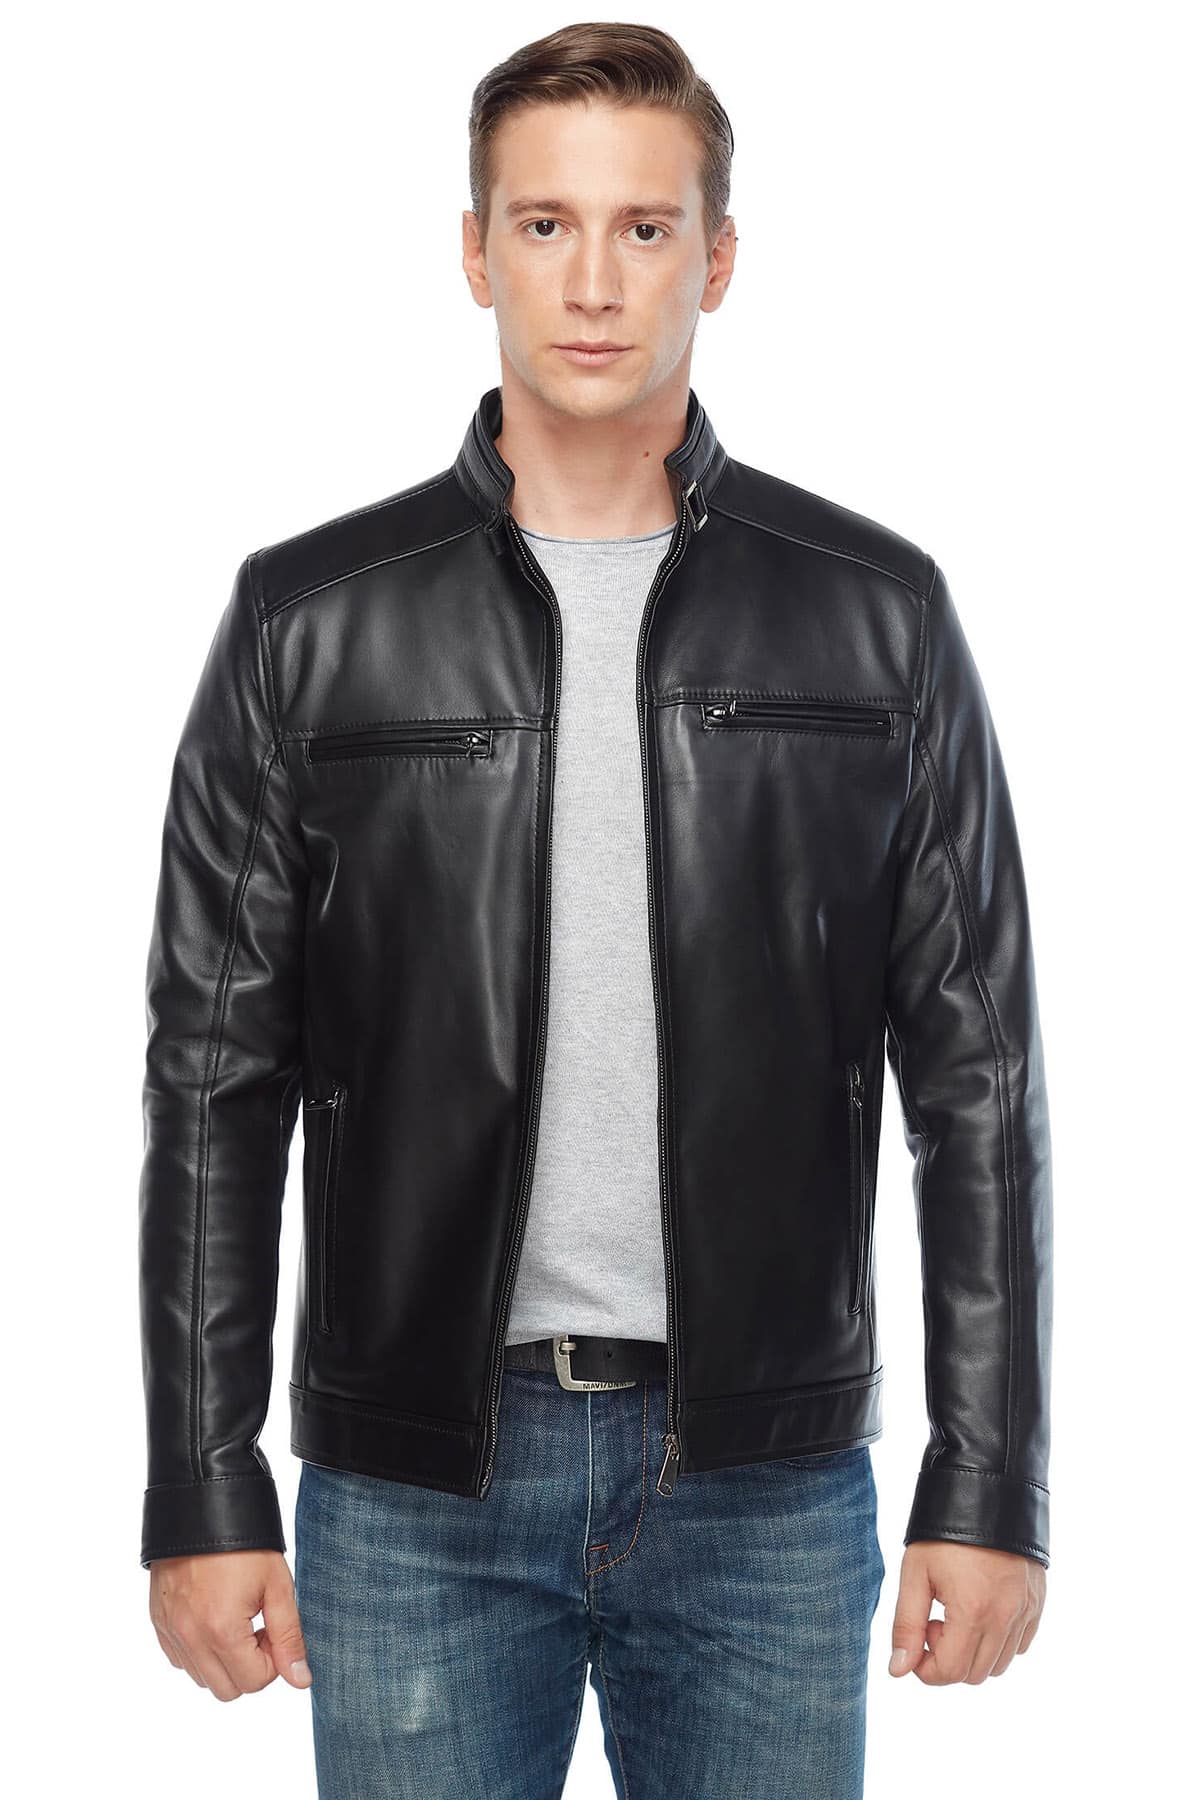 Urban Fashion Studio Craig Mcginlay Genuine Leather Jacket in Black